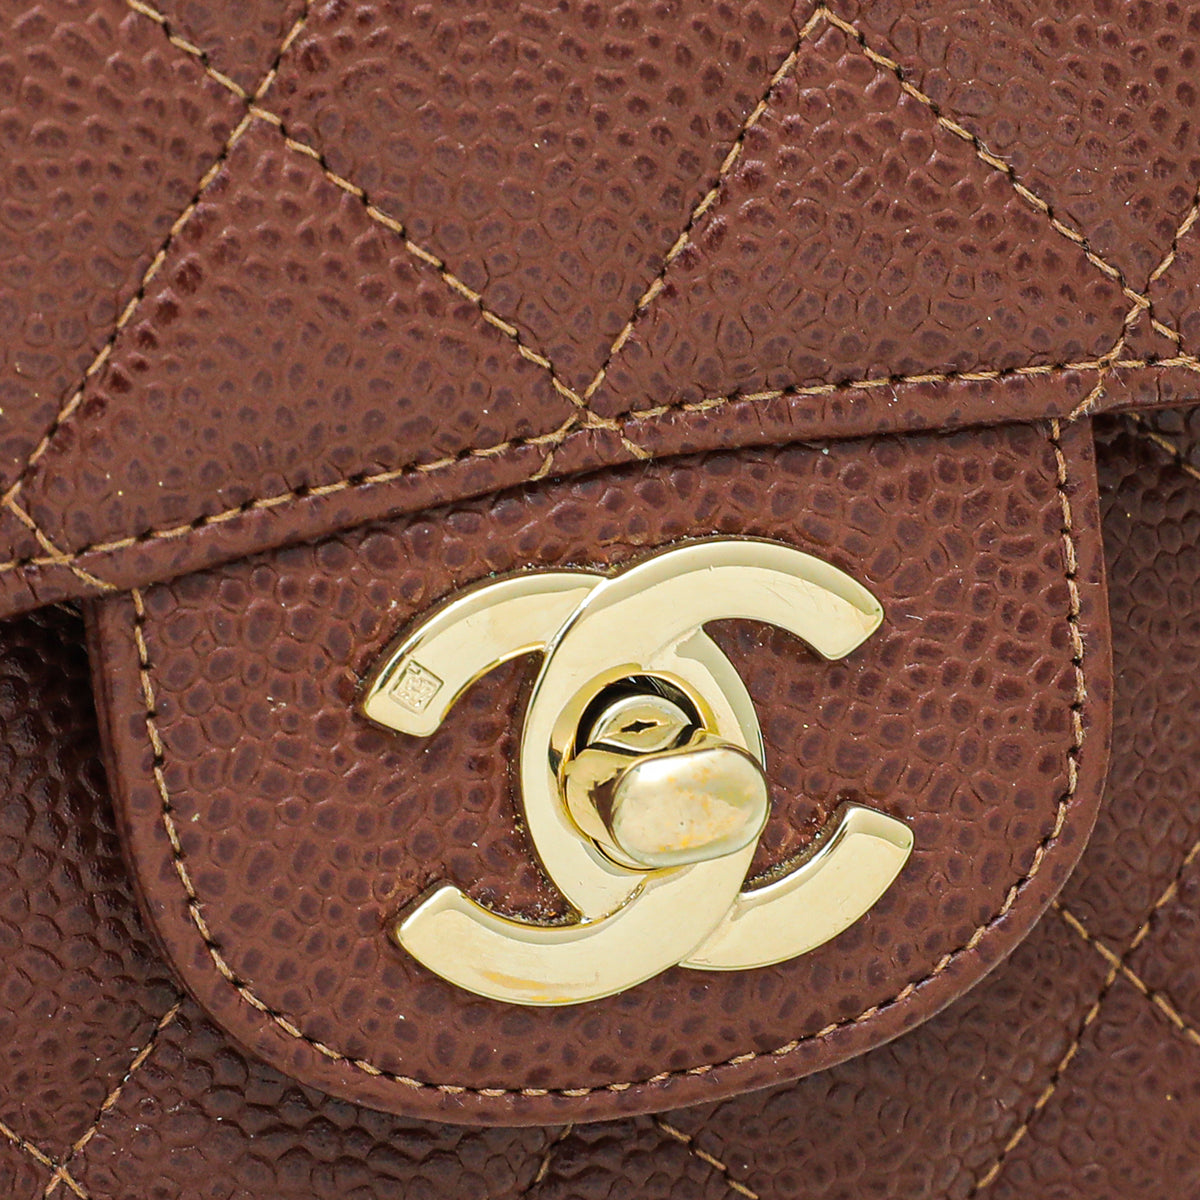 Chanel Brown CC Classic Double Flap Medium Bag